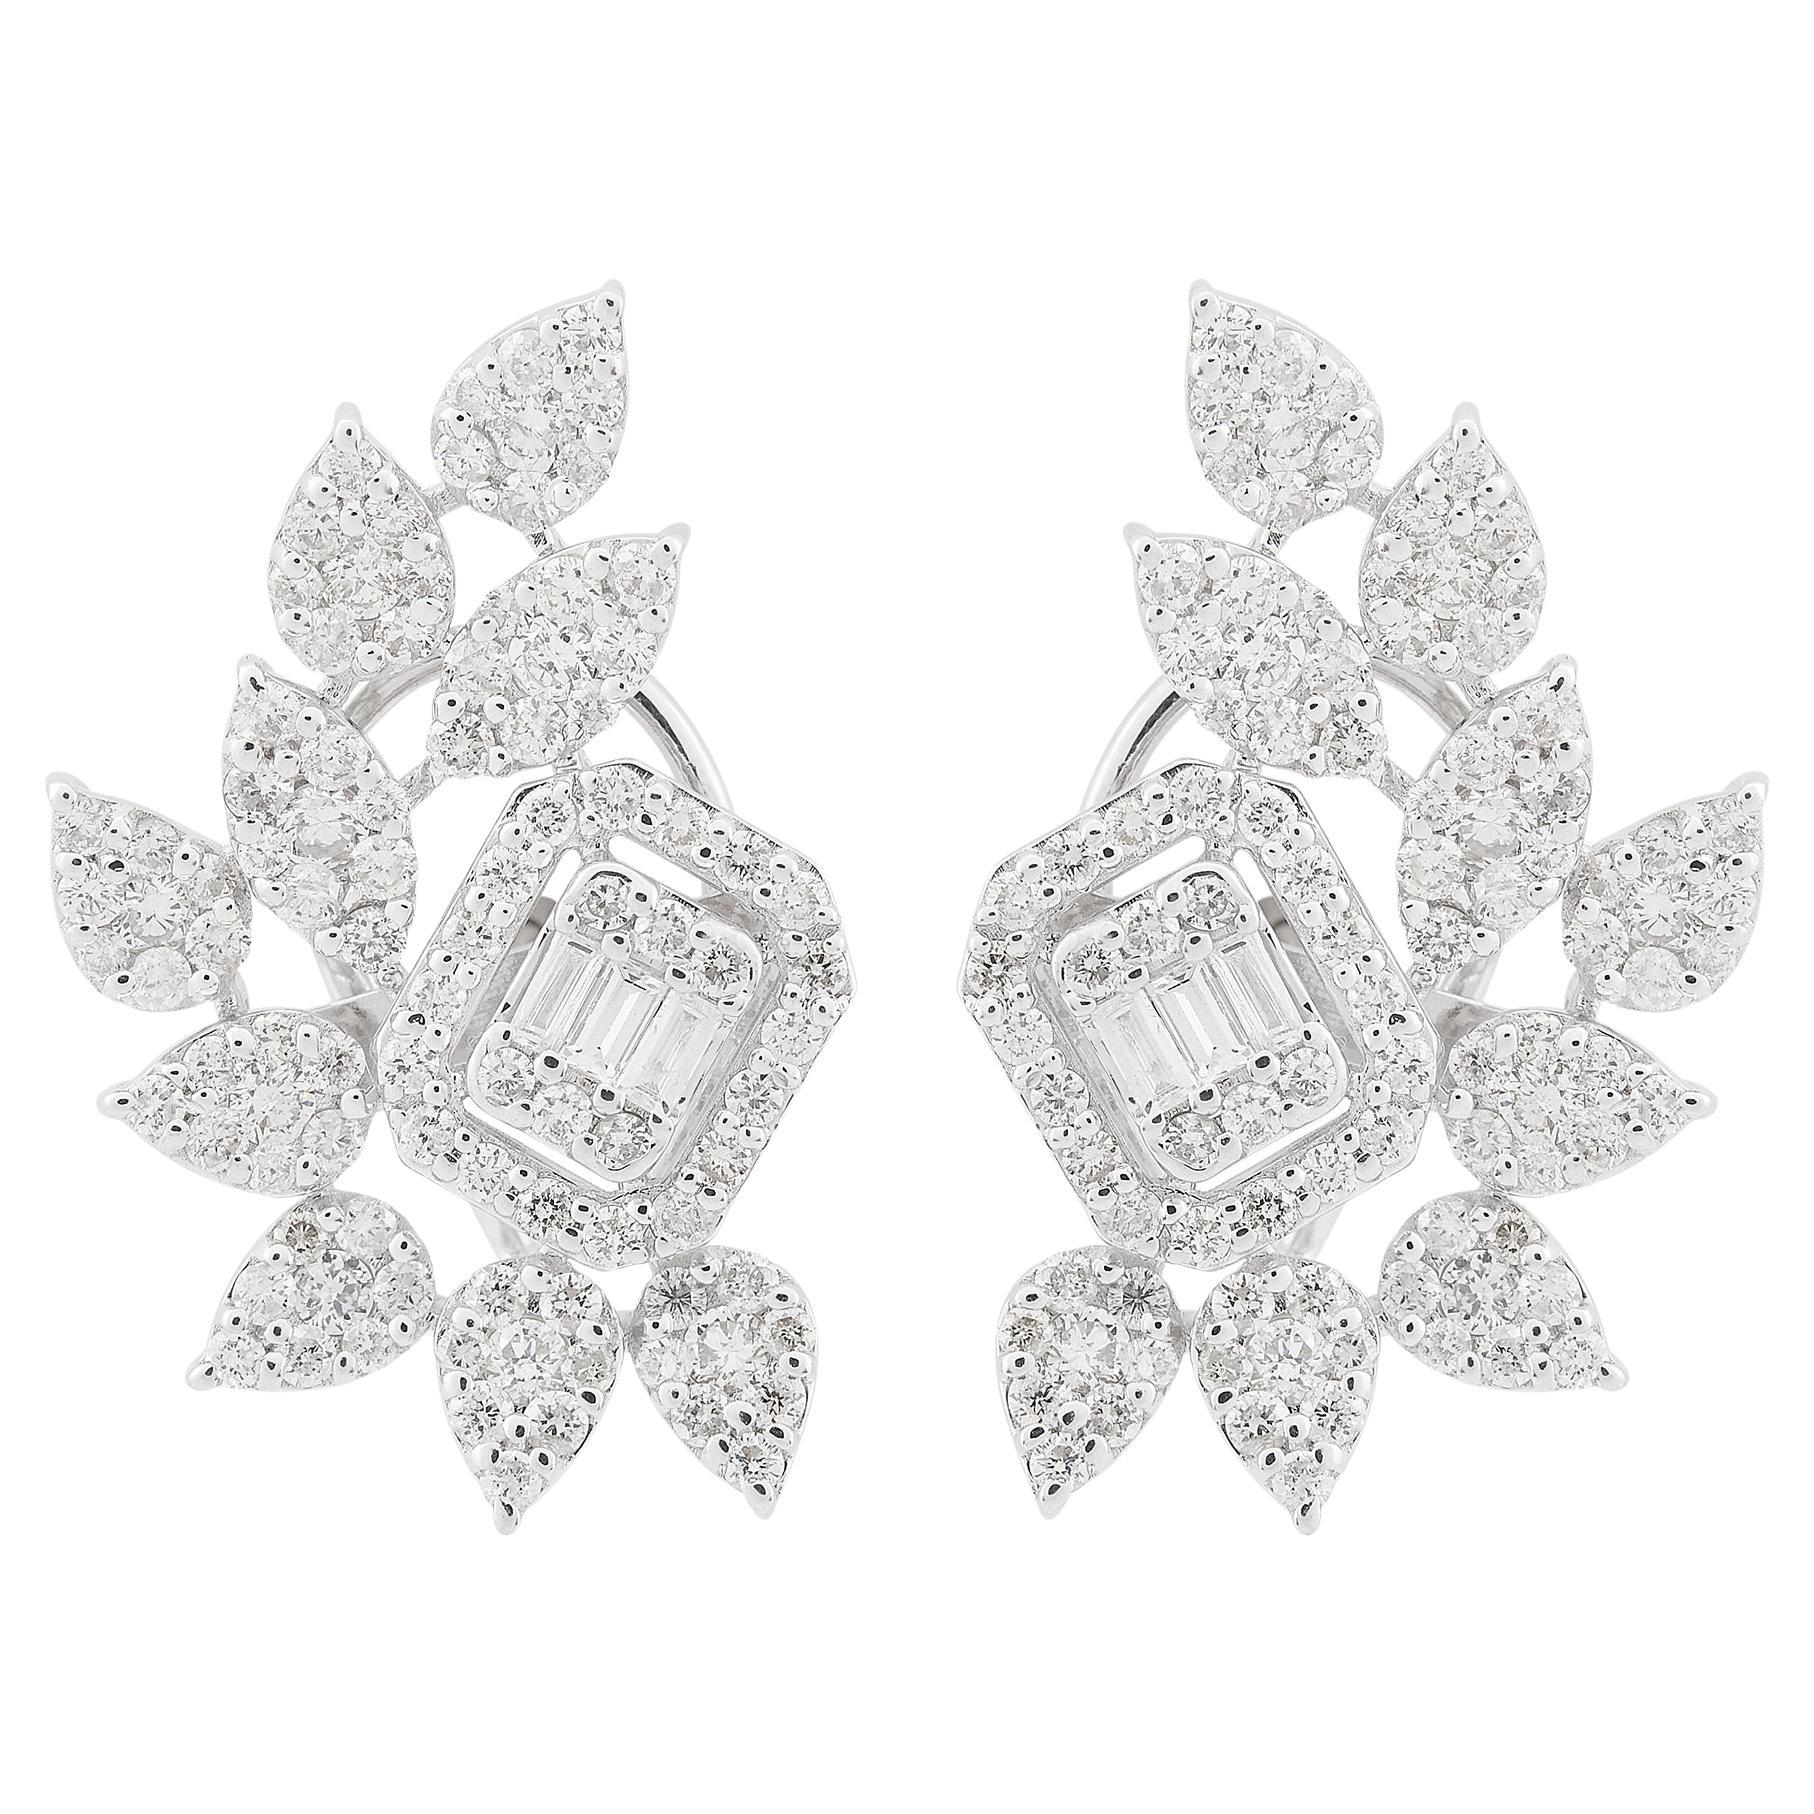 2.70 Carat SI Clarity HI Color Diamond Stud Earrings 18 Karat White Gold Jewelry For Sale